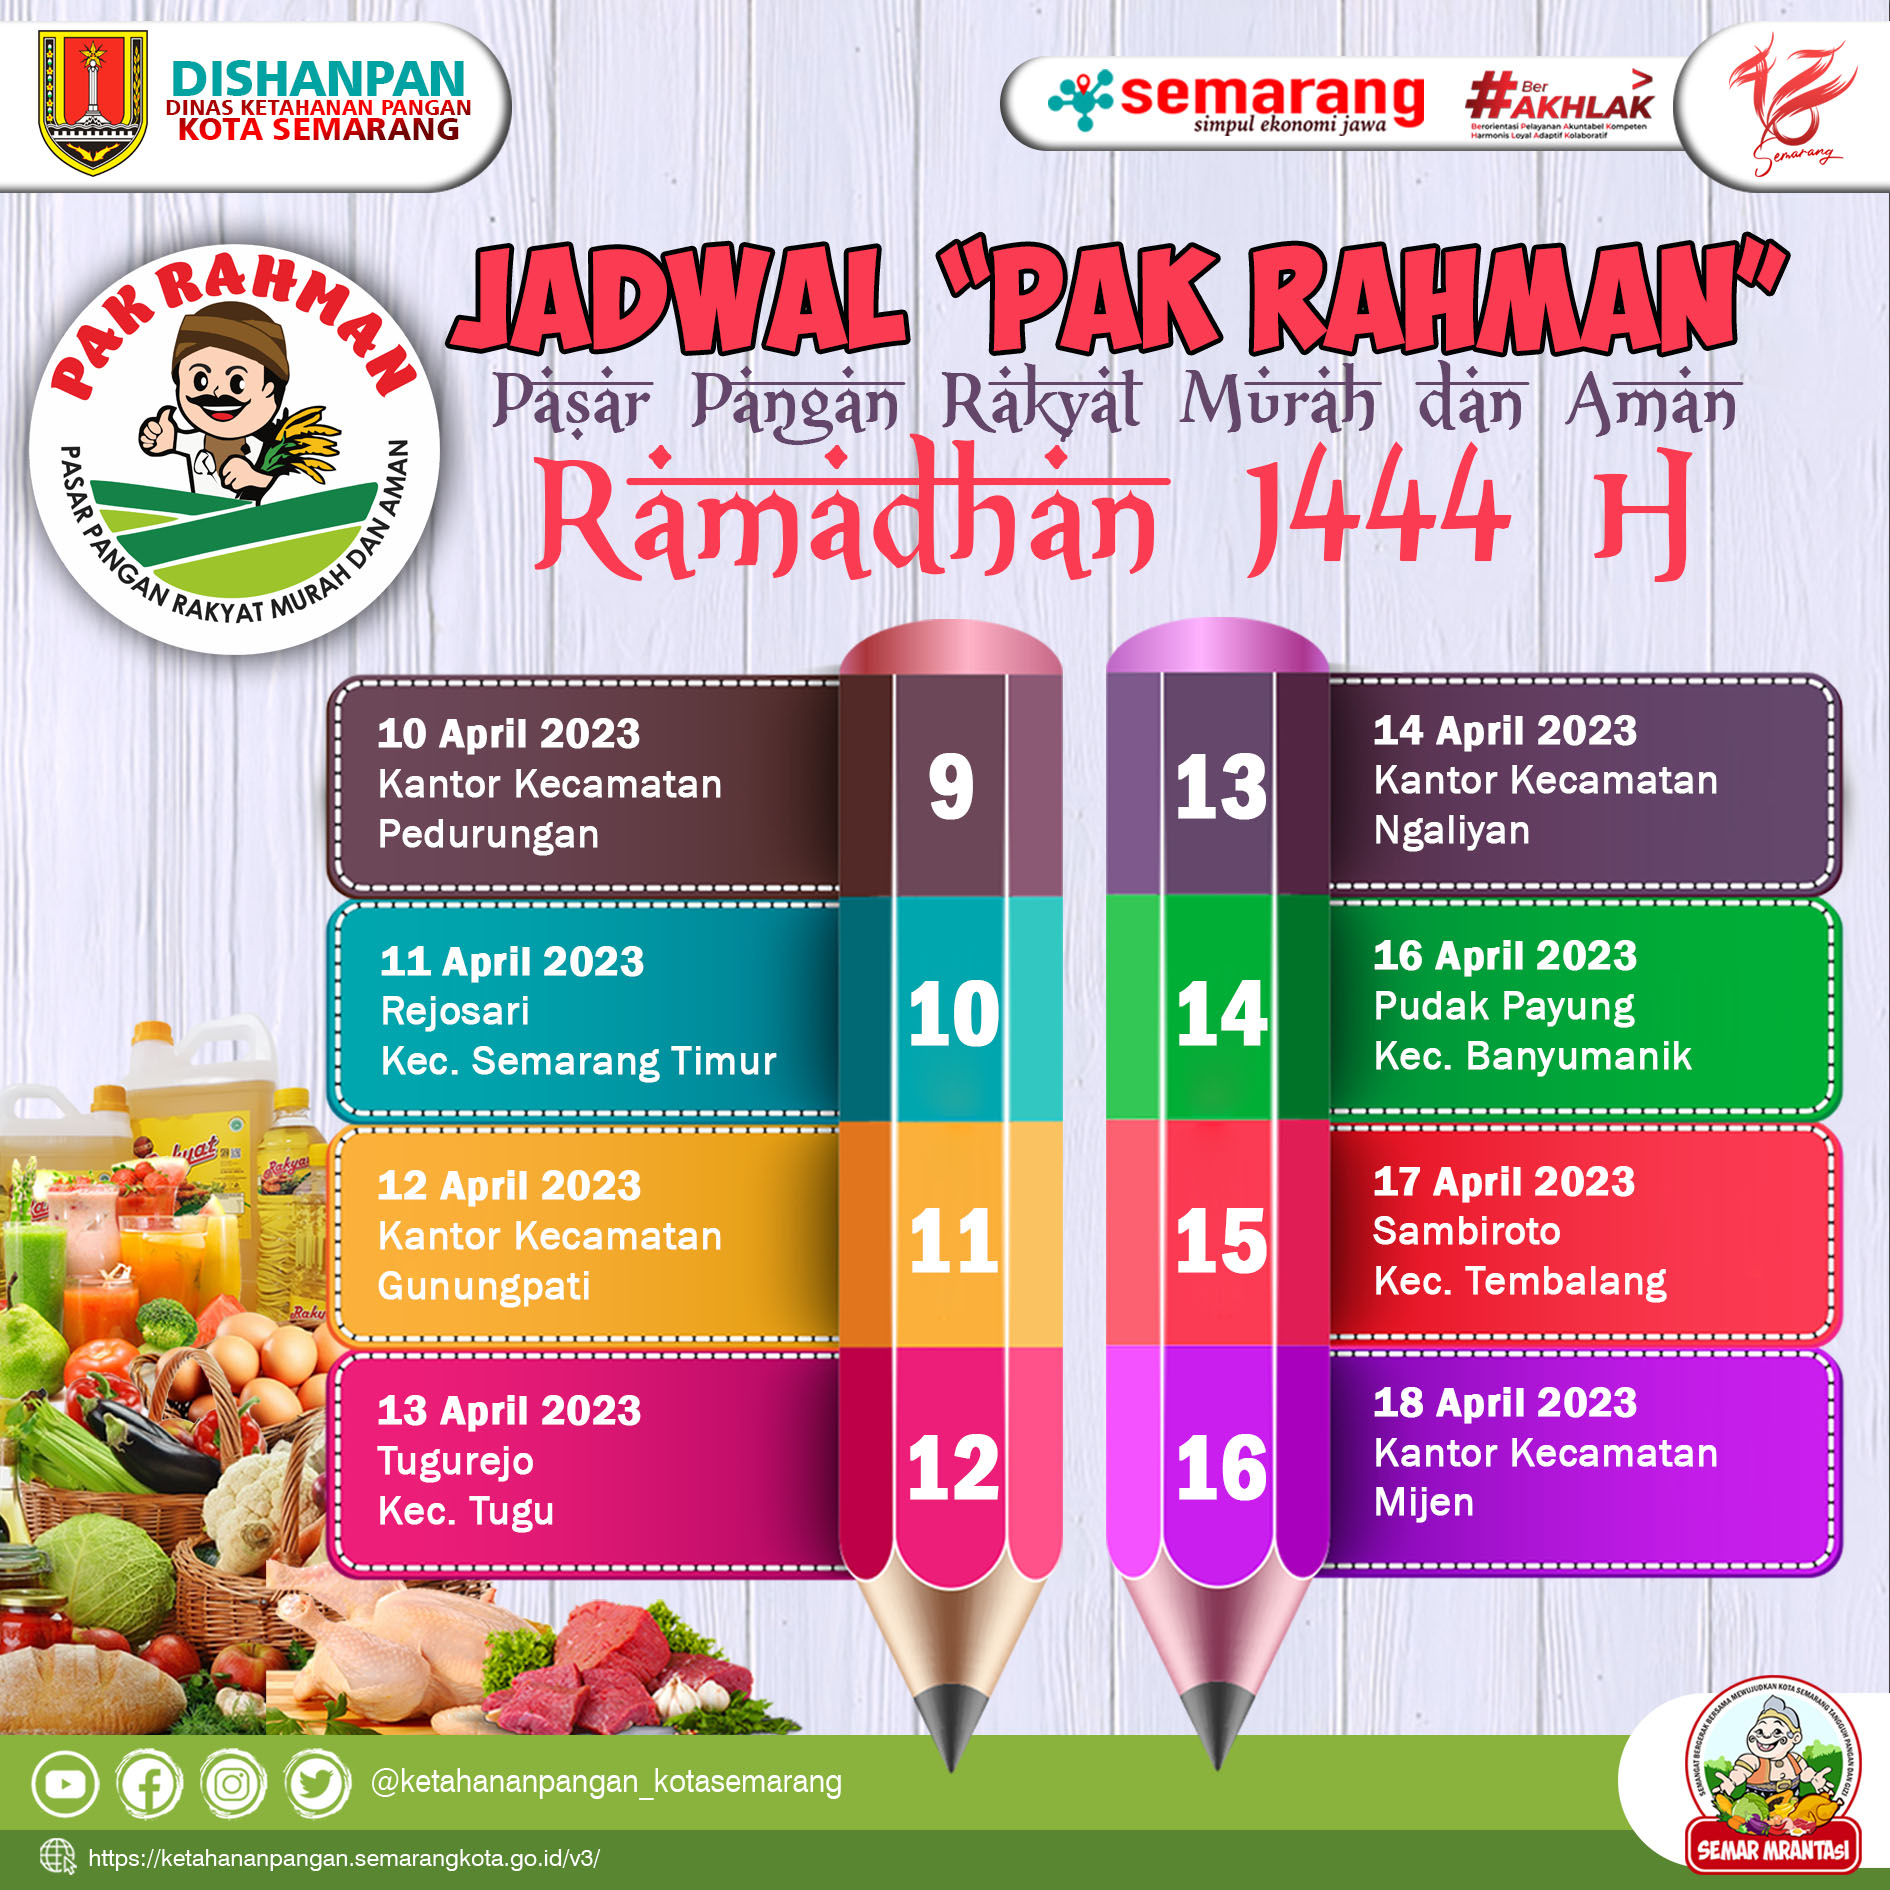 Jadwal Pasar Pangan Rakyat Murah dan Aman (PAK RAHMAN) Safari Ramadhan 1444H